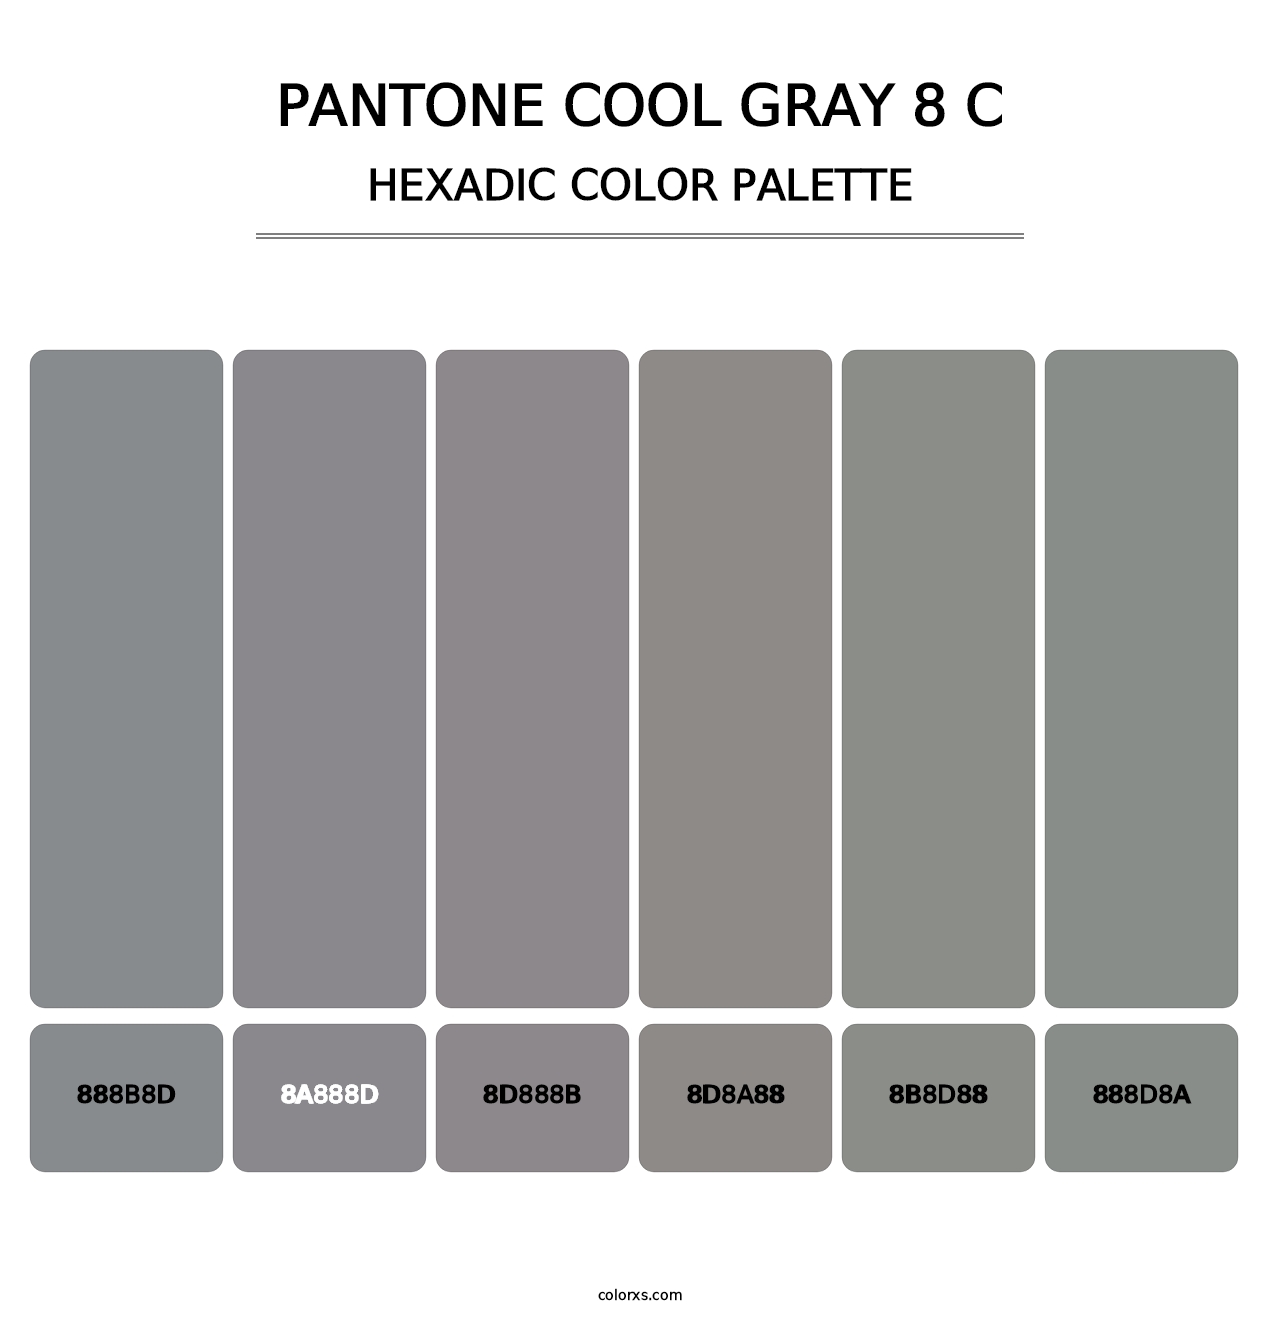 PANTONE Cool Gray 8 C - Hexadic Color Palette